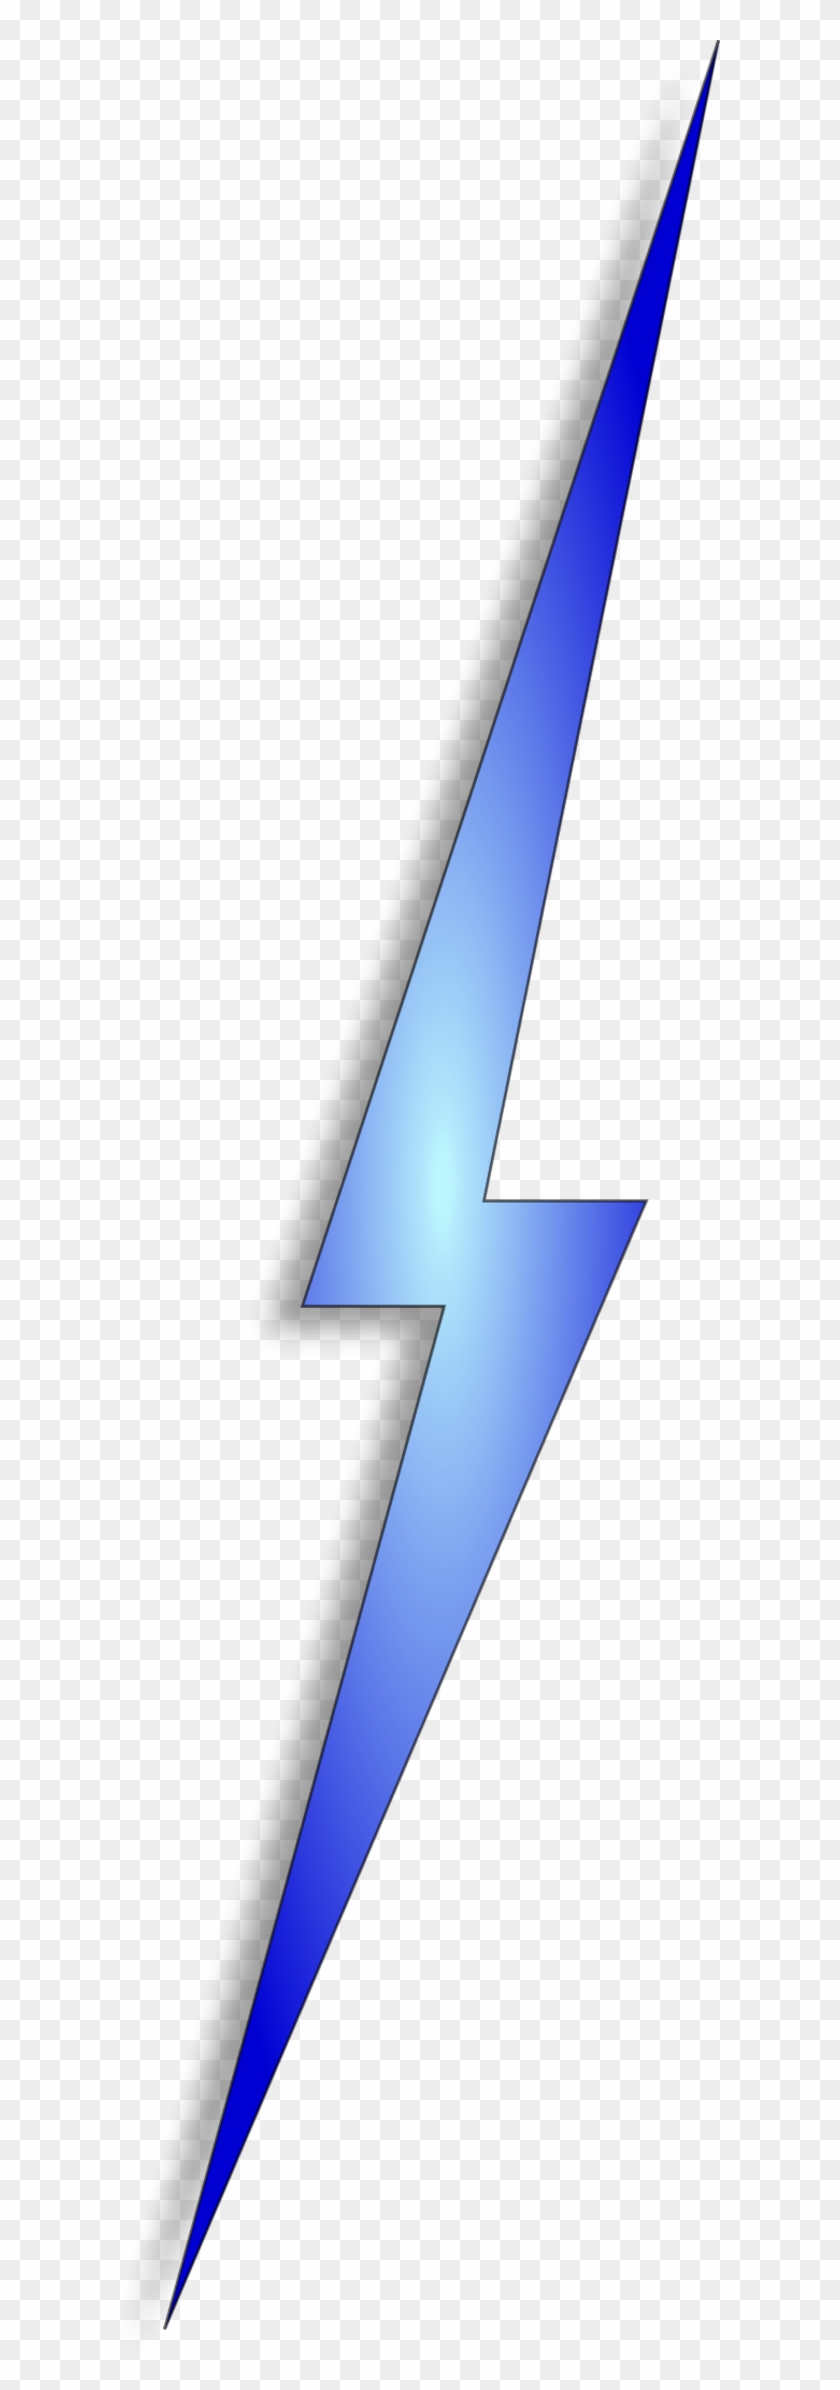 Thunderbolt Clipart - Blue Lightning Bolt Clipart - Free Transparent PNG  Clipart Images Download